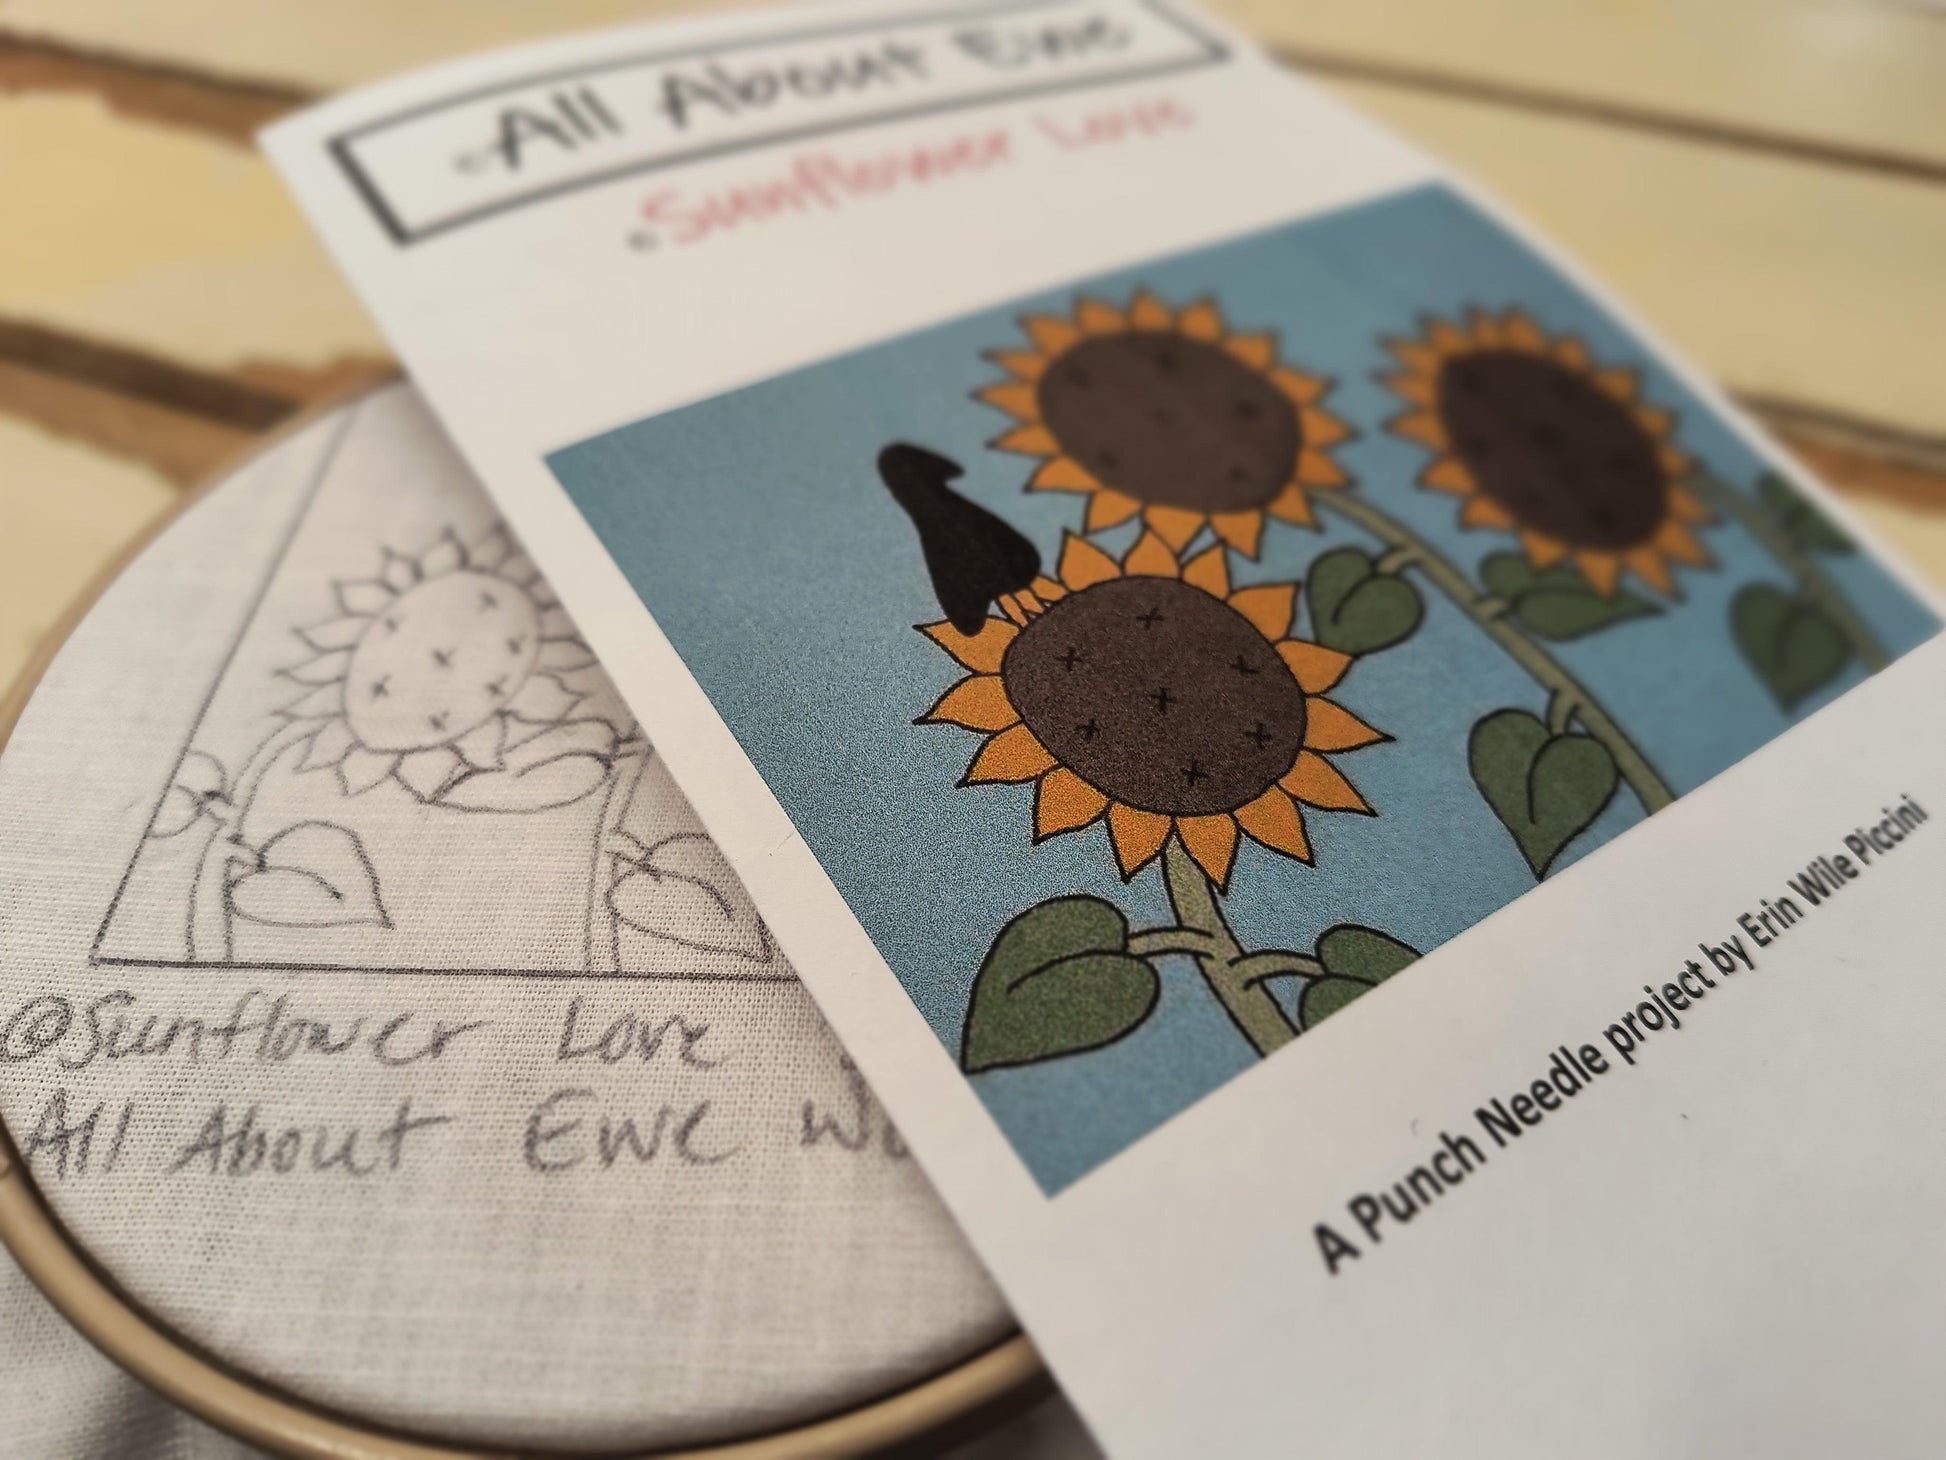 SUNFLOWER LOVE Paper Pattern - All About Ewe Wool Shop